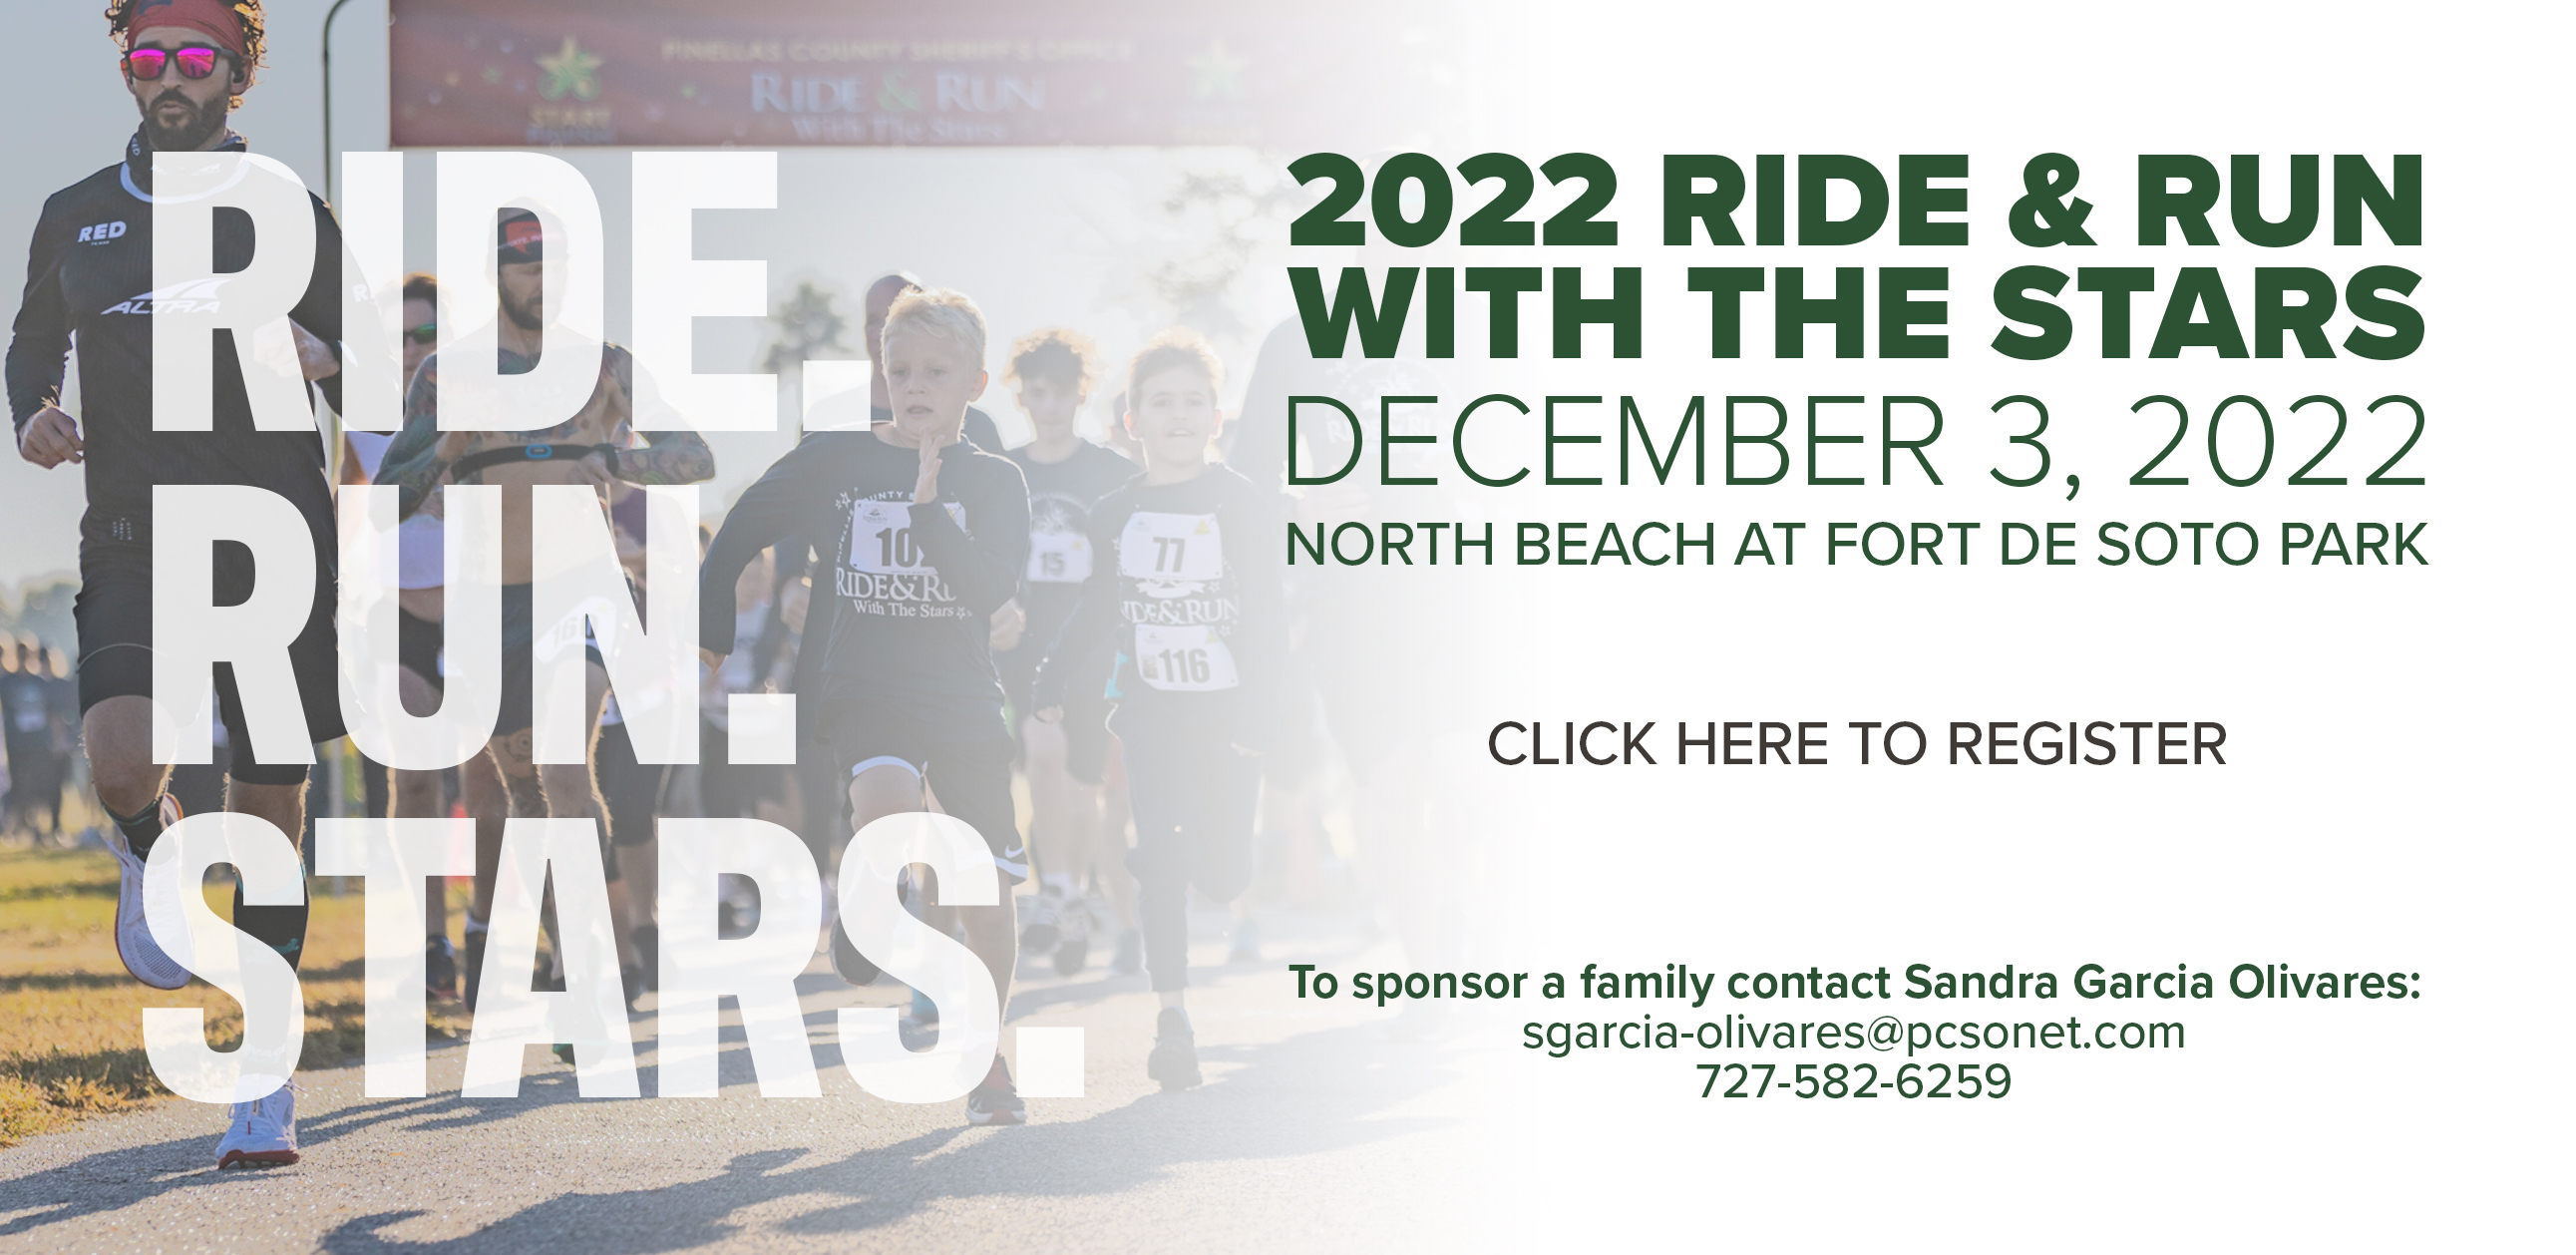 2022 Ride & Run with the Stars; December 3, 2022; North Beach at Fort De Soto Park; Click Here to Register; To sponsor a family contact Sandra Garcia Olivares: sgarcia-olivares@pcsonet.com, 727-582-6259